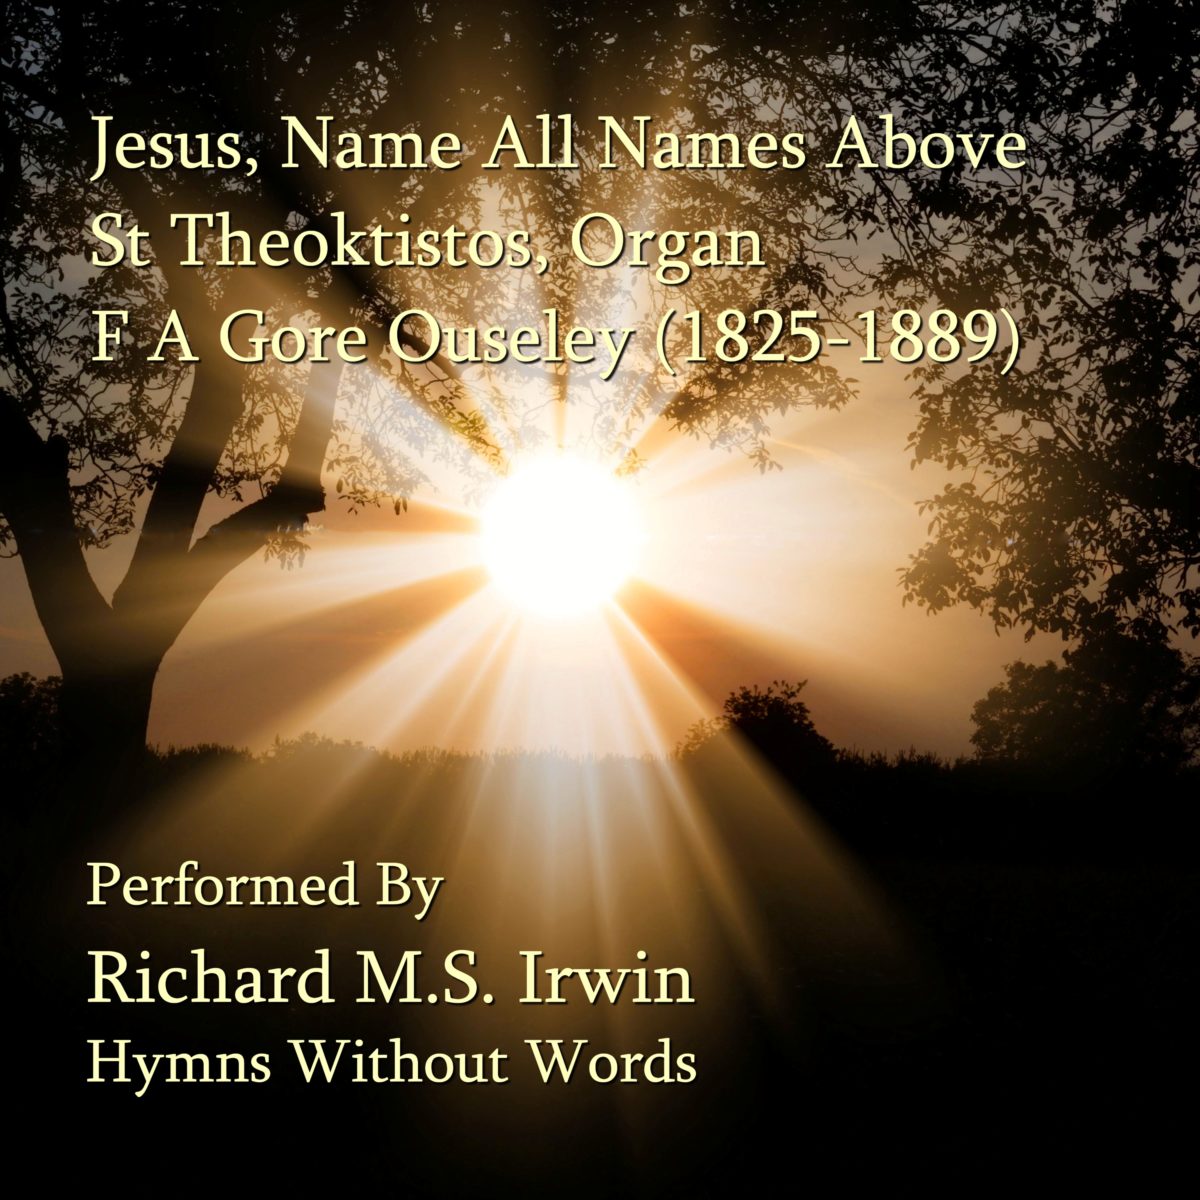 Jesus Name All Names Above